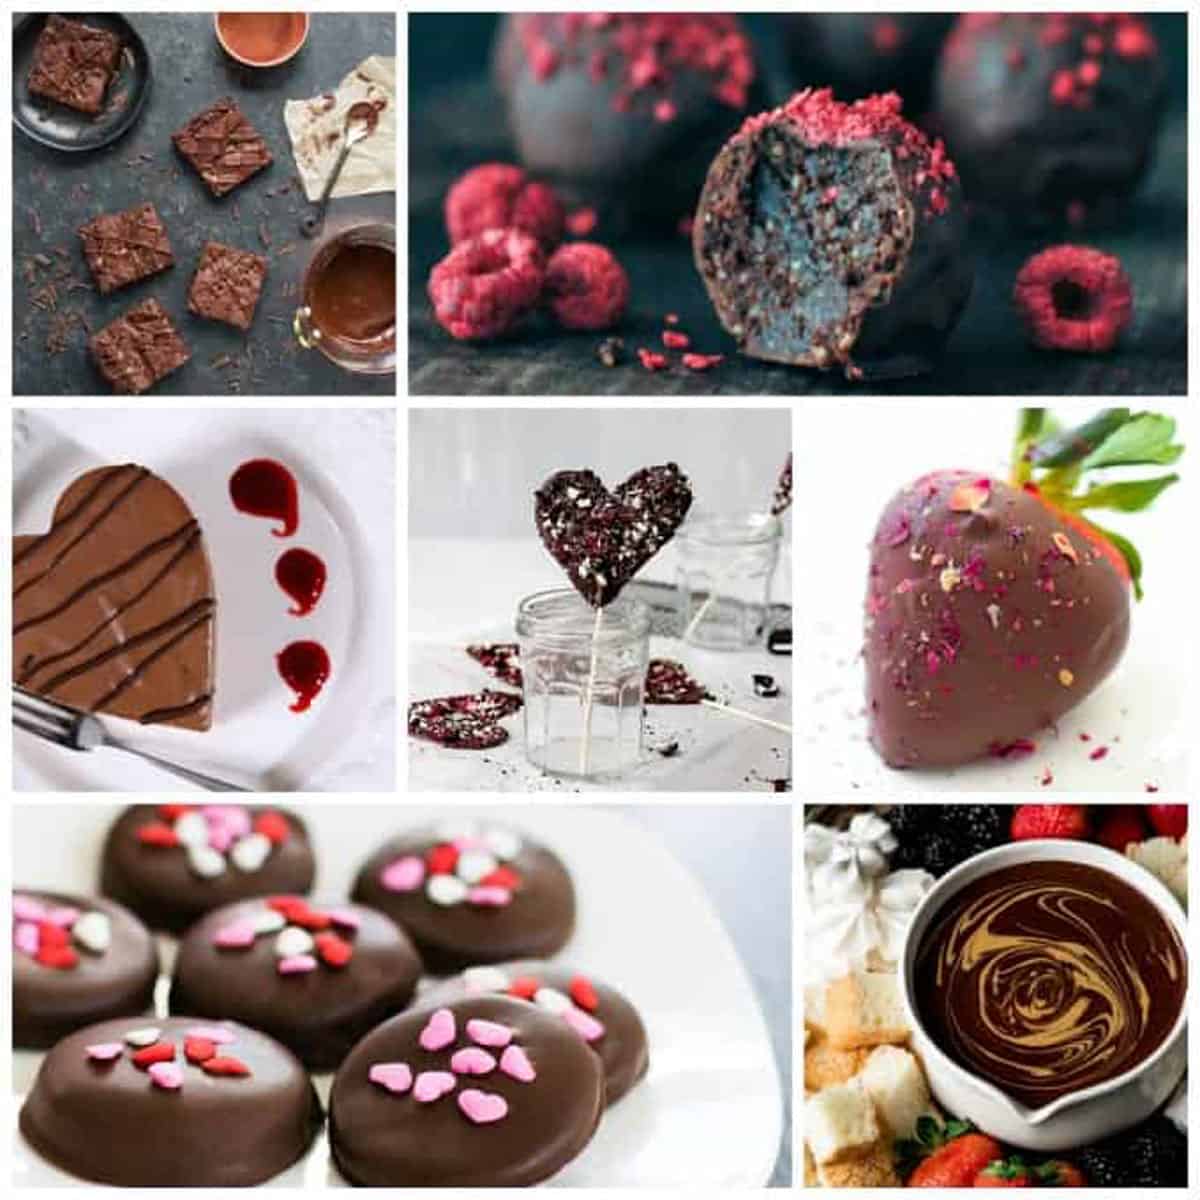 7 photo collage of sweet vegan chocolate recipes.